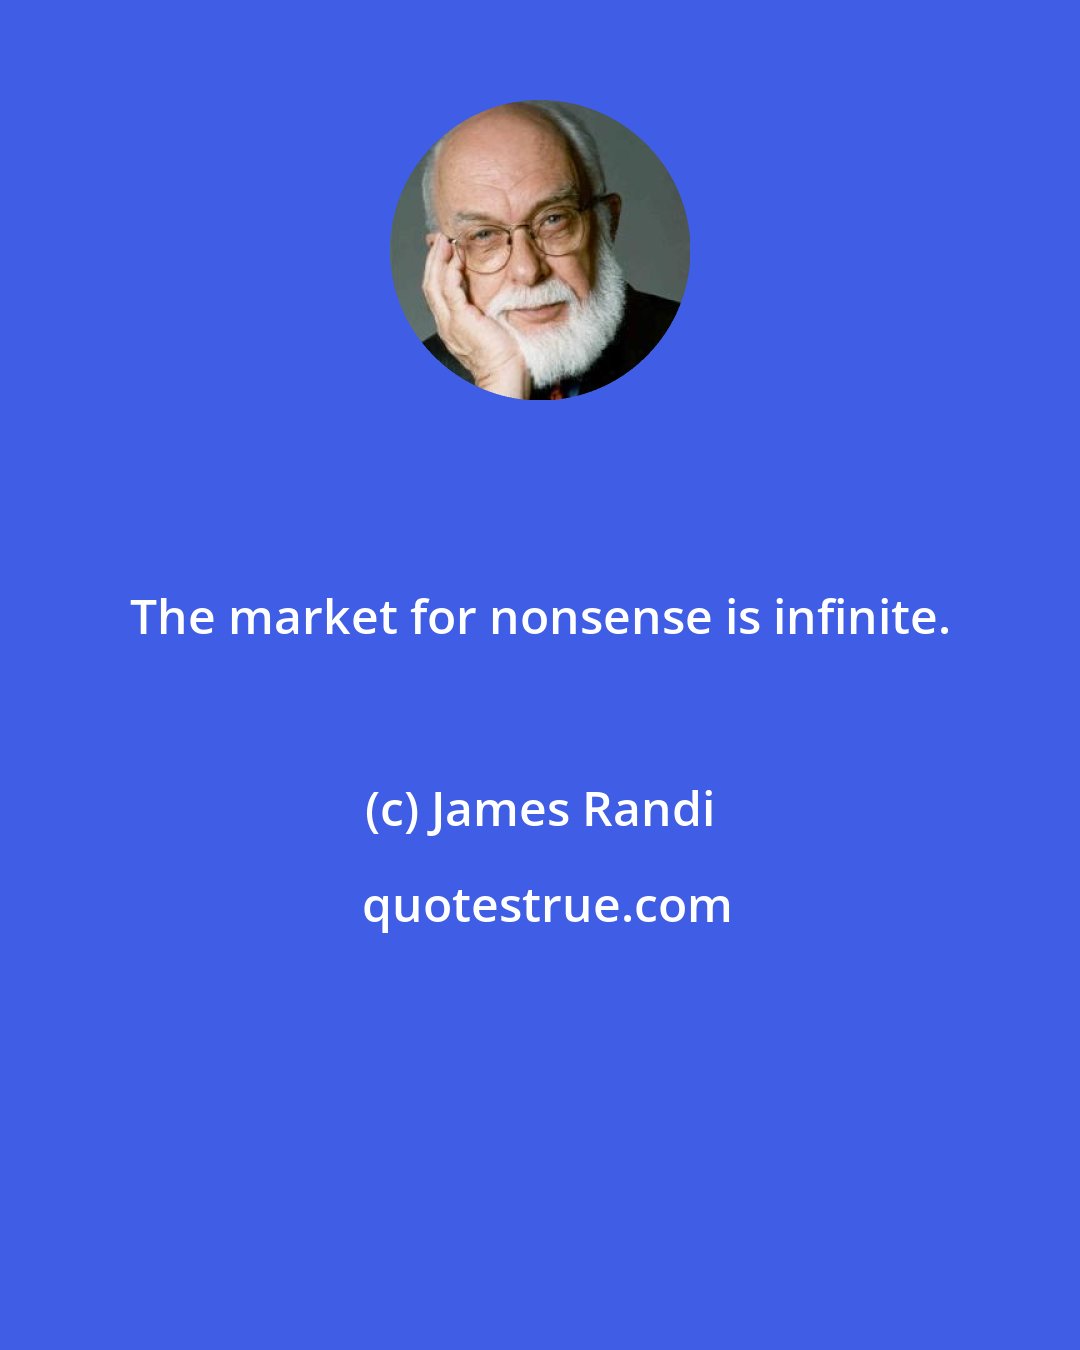 James Randi: The market for nonsense is infinite.